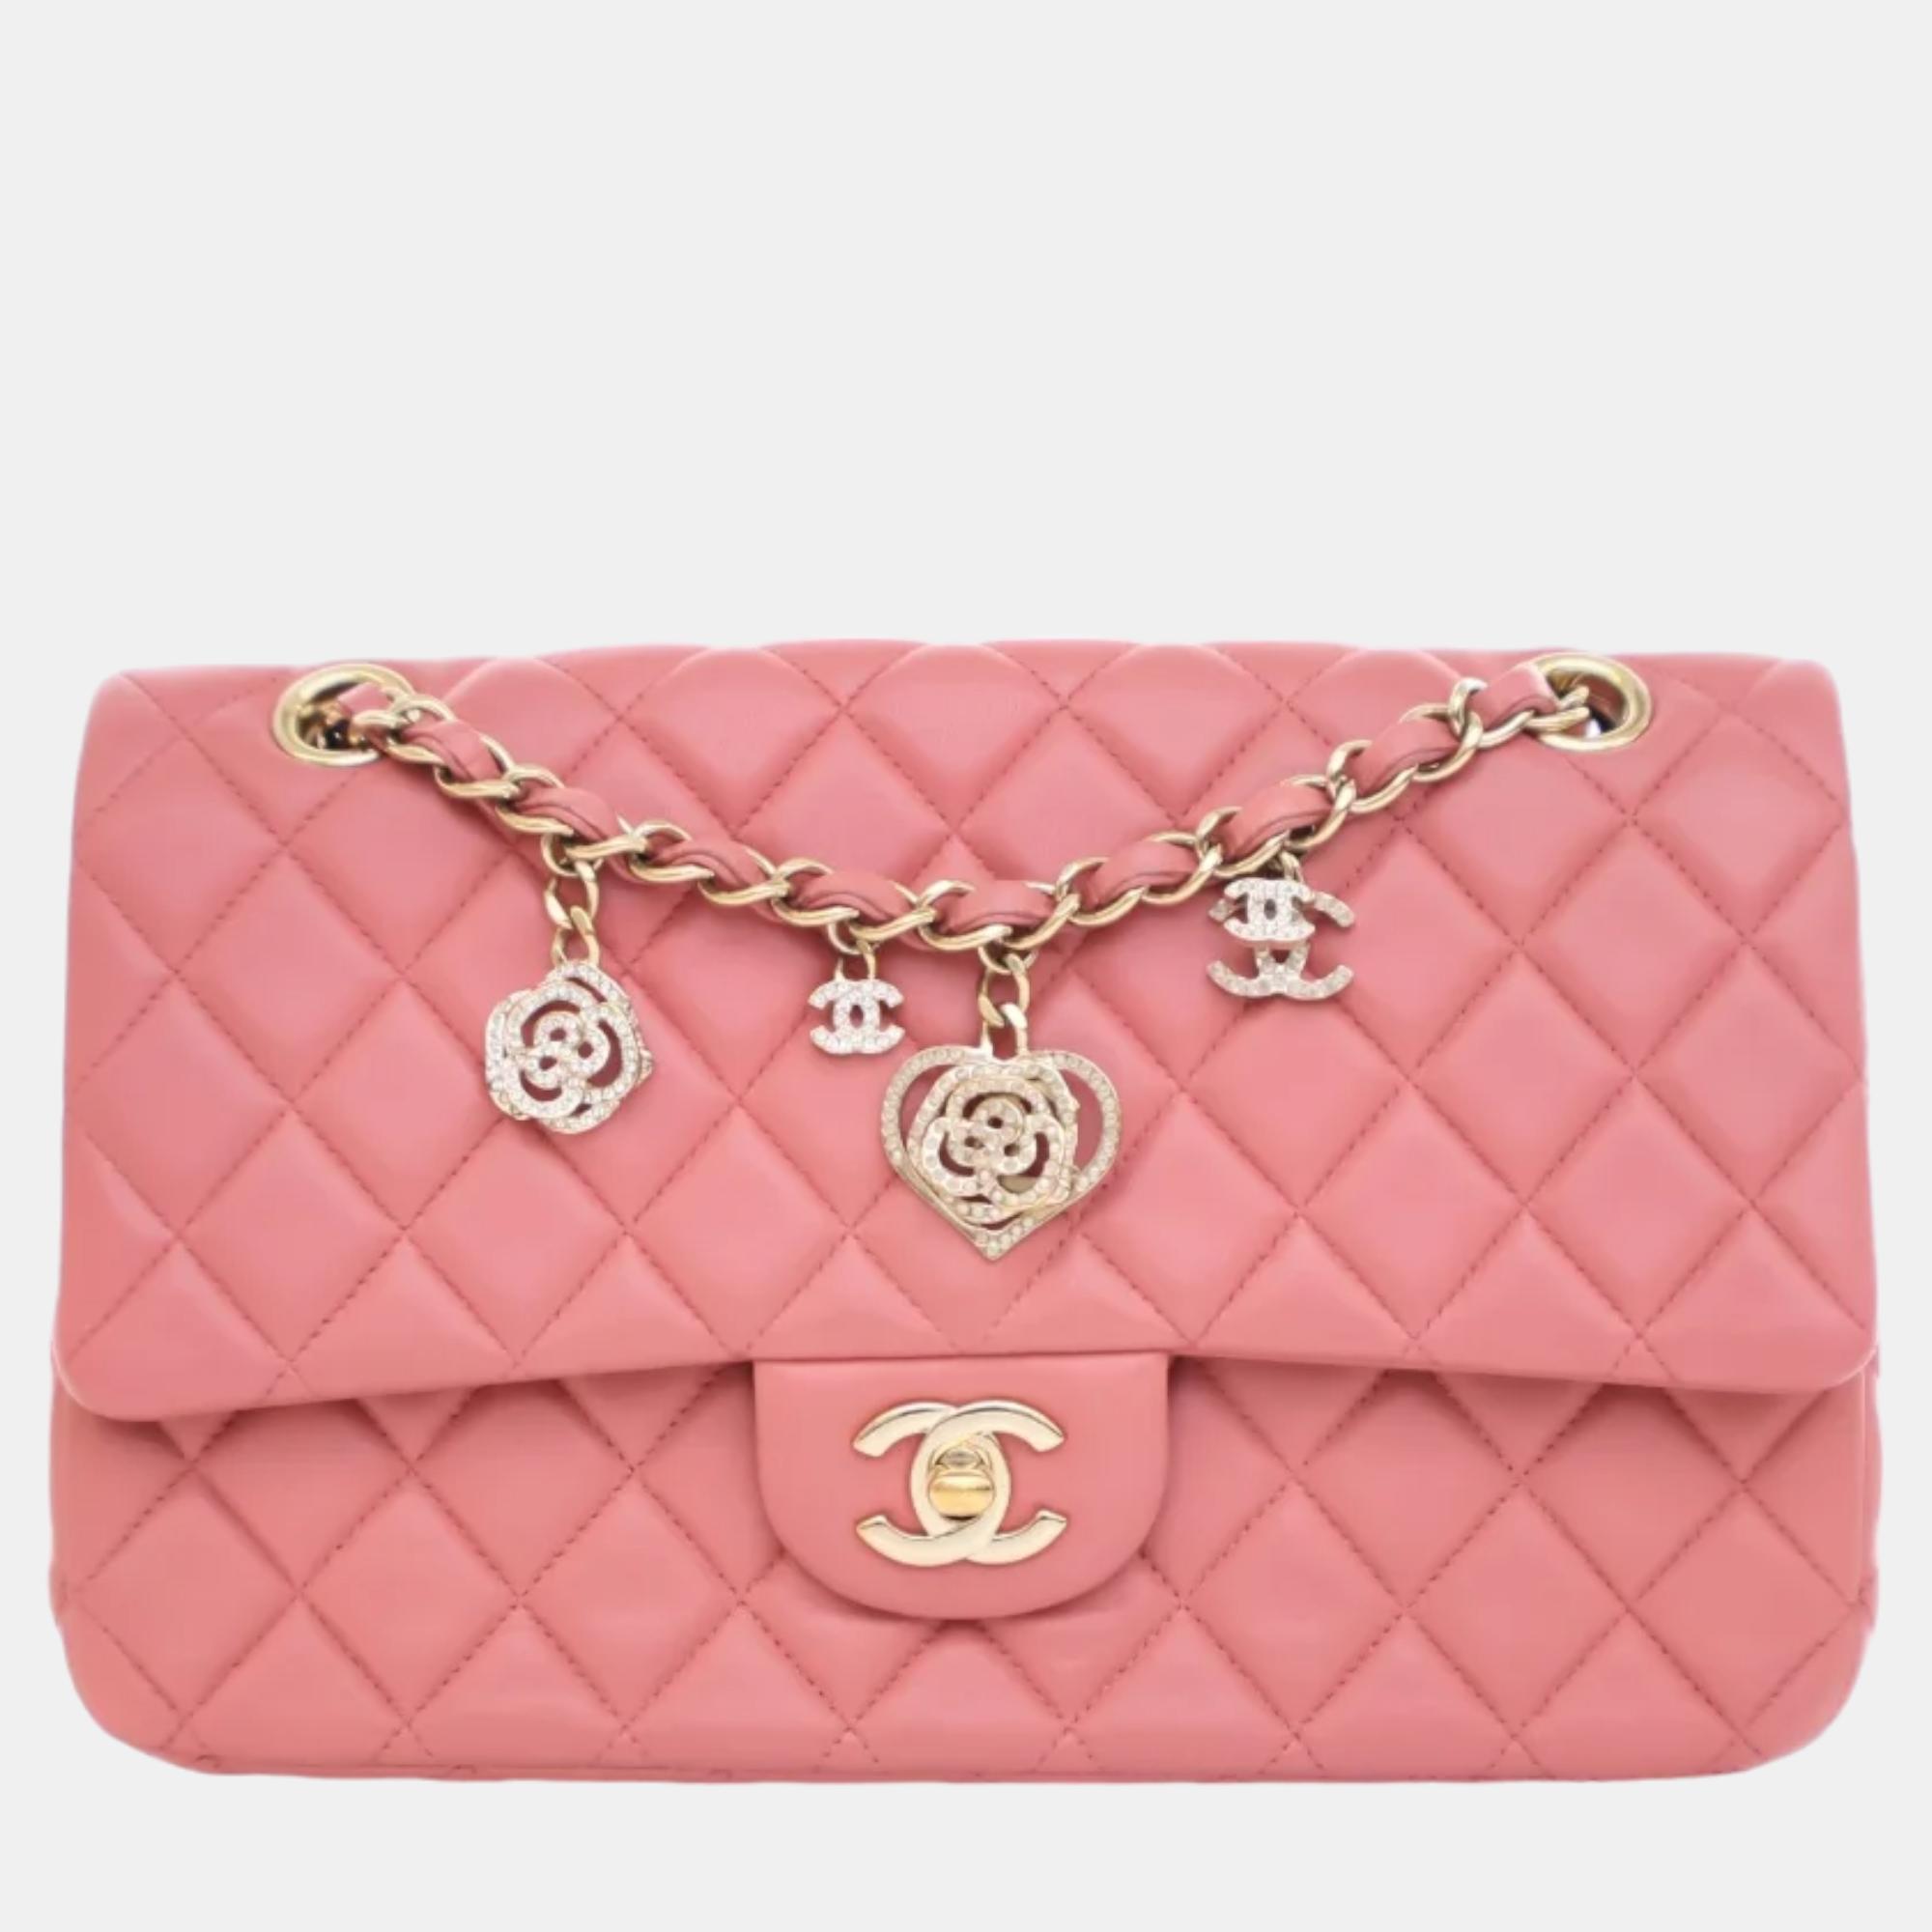 Chanel peach lambskin leather medium classic single flap valentine charm shoulder bag